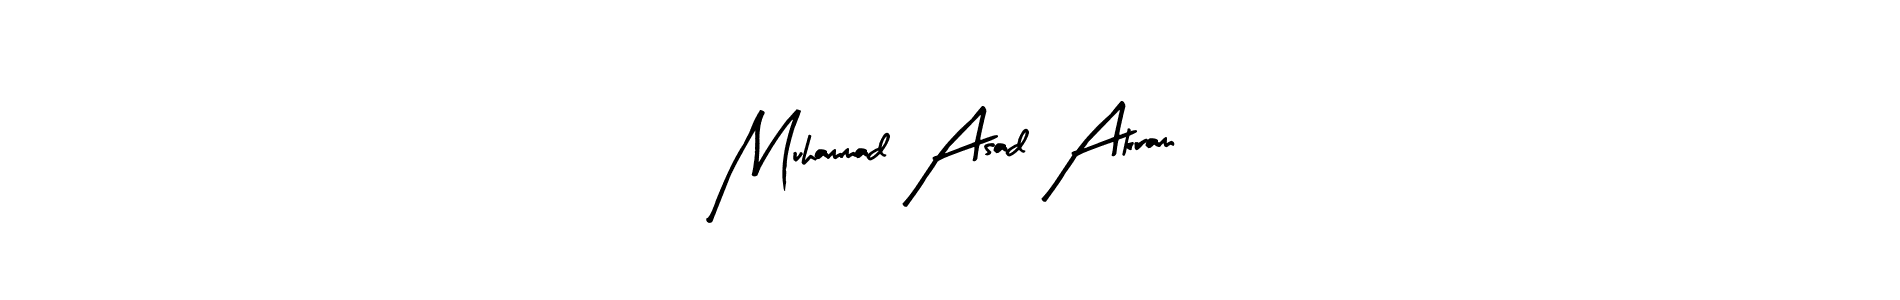 How to Draw Muhammad Asad Akram signature style? Arty Signature is a latest design signature styles for name Muhammad Asad Akram. Muhammad Asad Akram signature style 8 images and pictures png